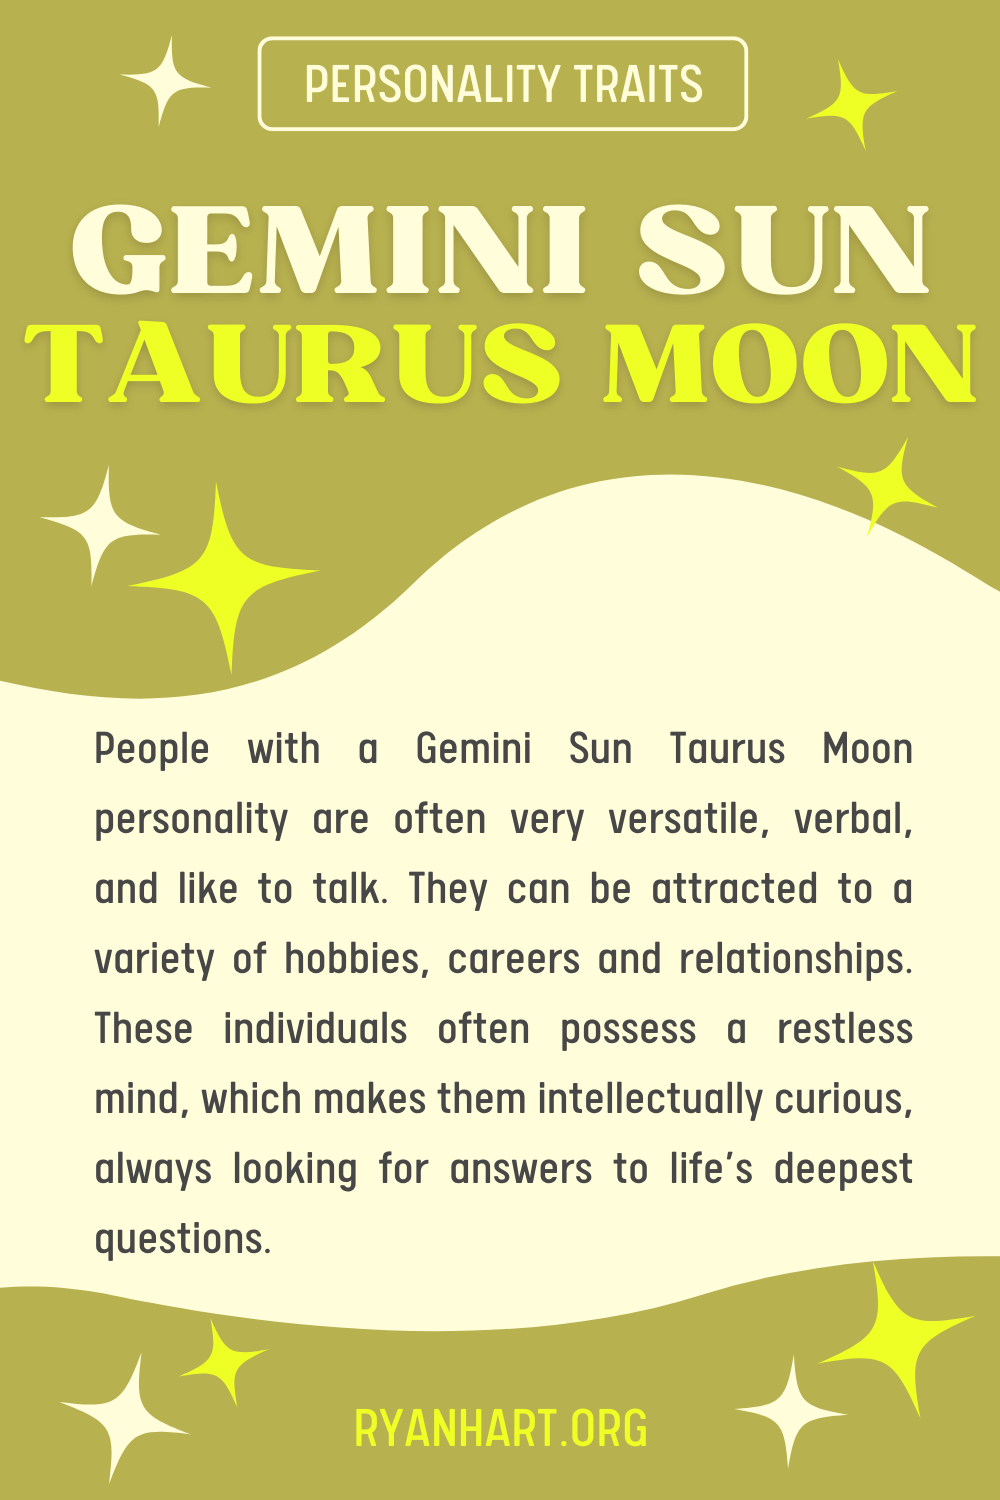 Gemini Sun Taurus Moon Description